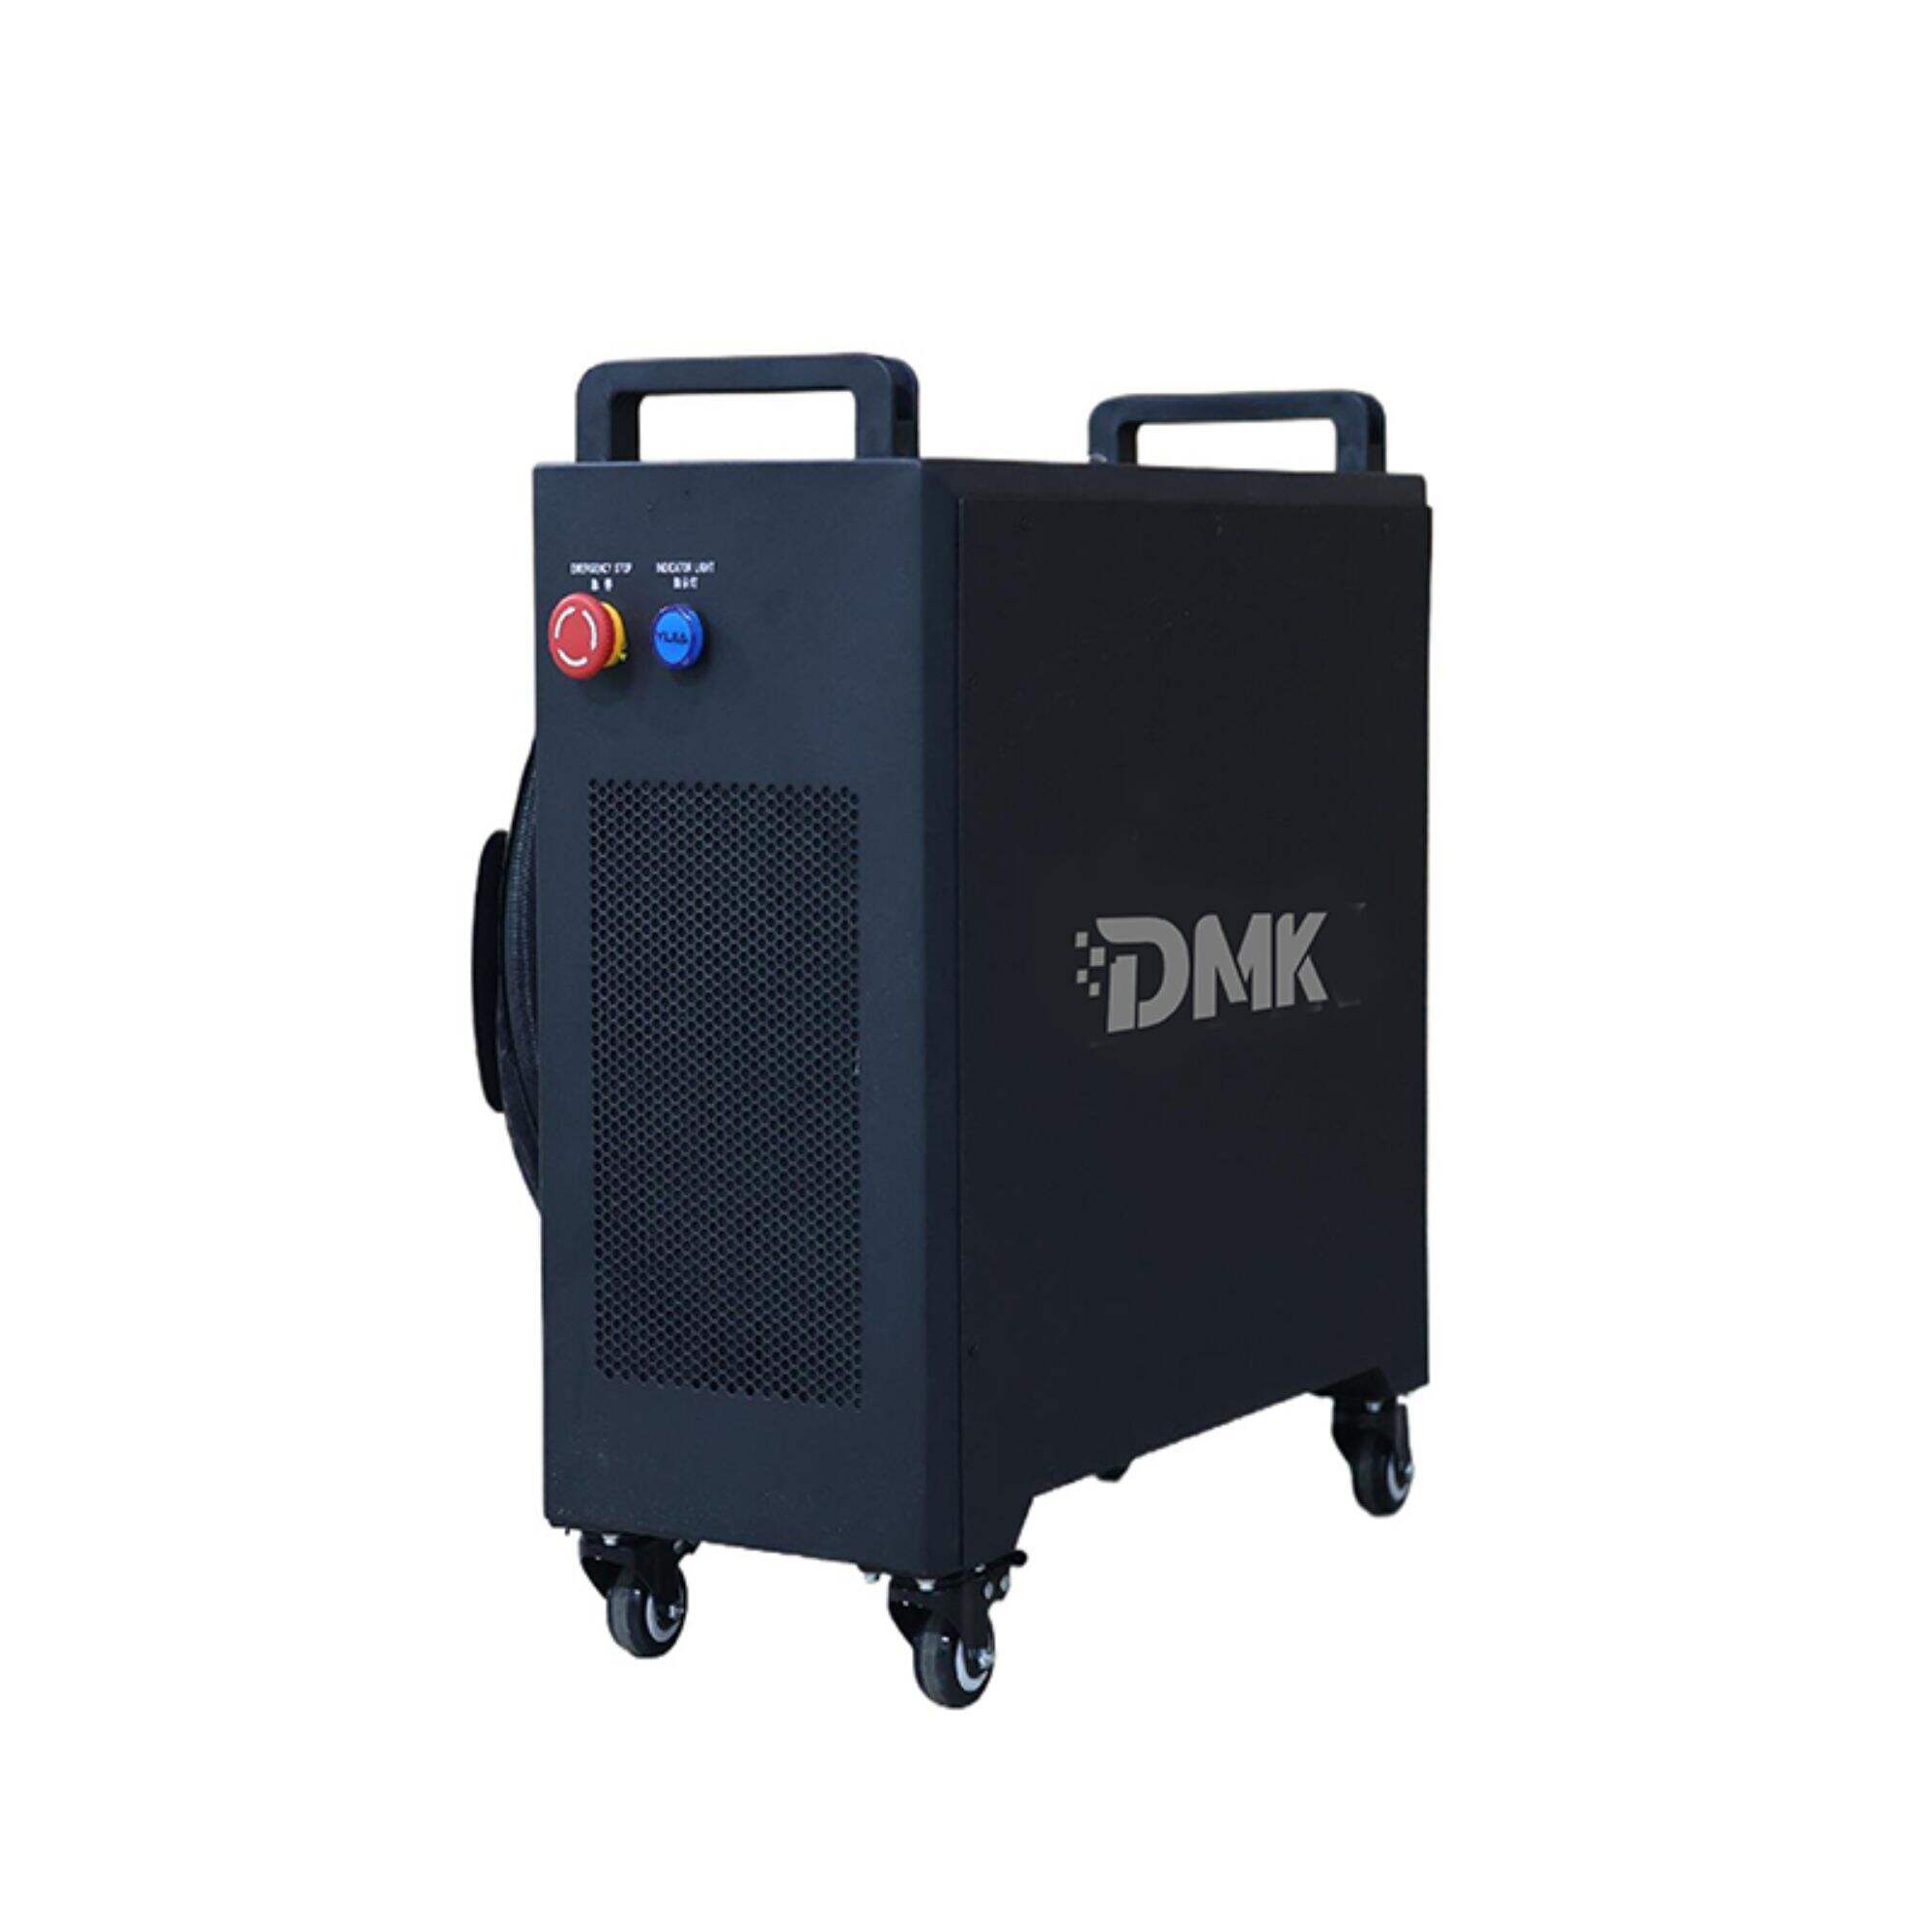 DMK 1500W Portable Handheld Fiber Laser Welding Machine Mini Air-cooled Laser Welder